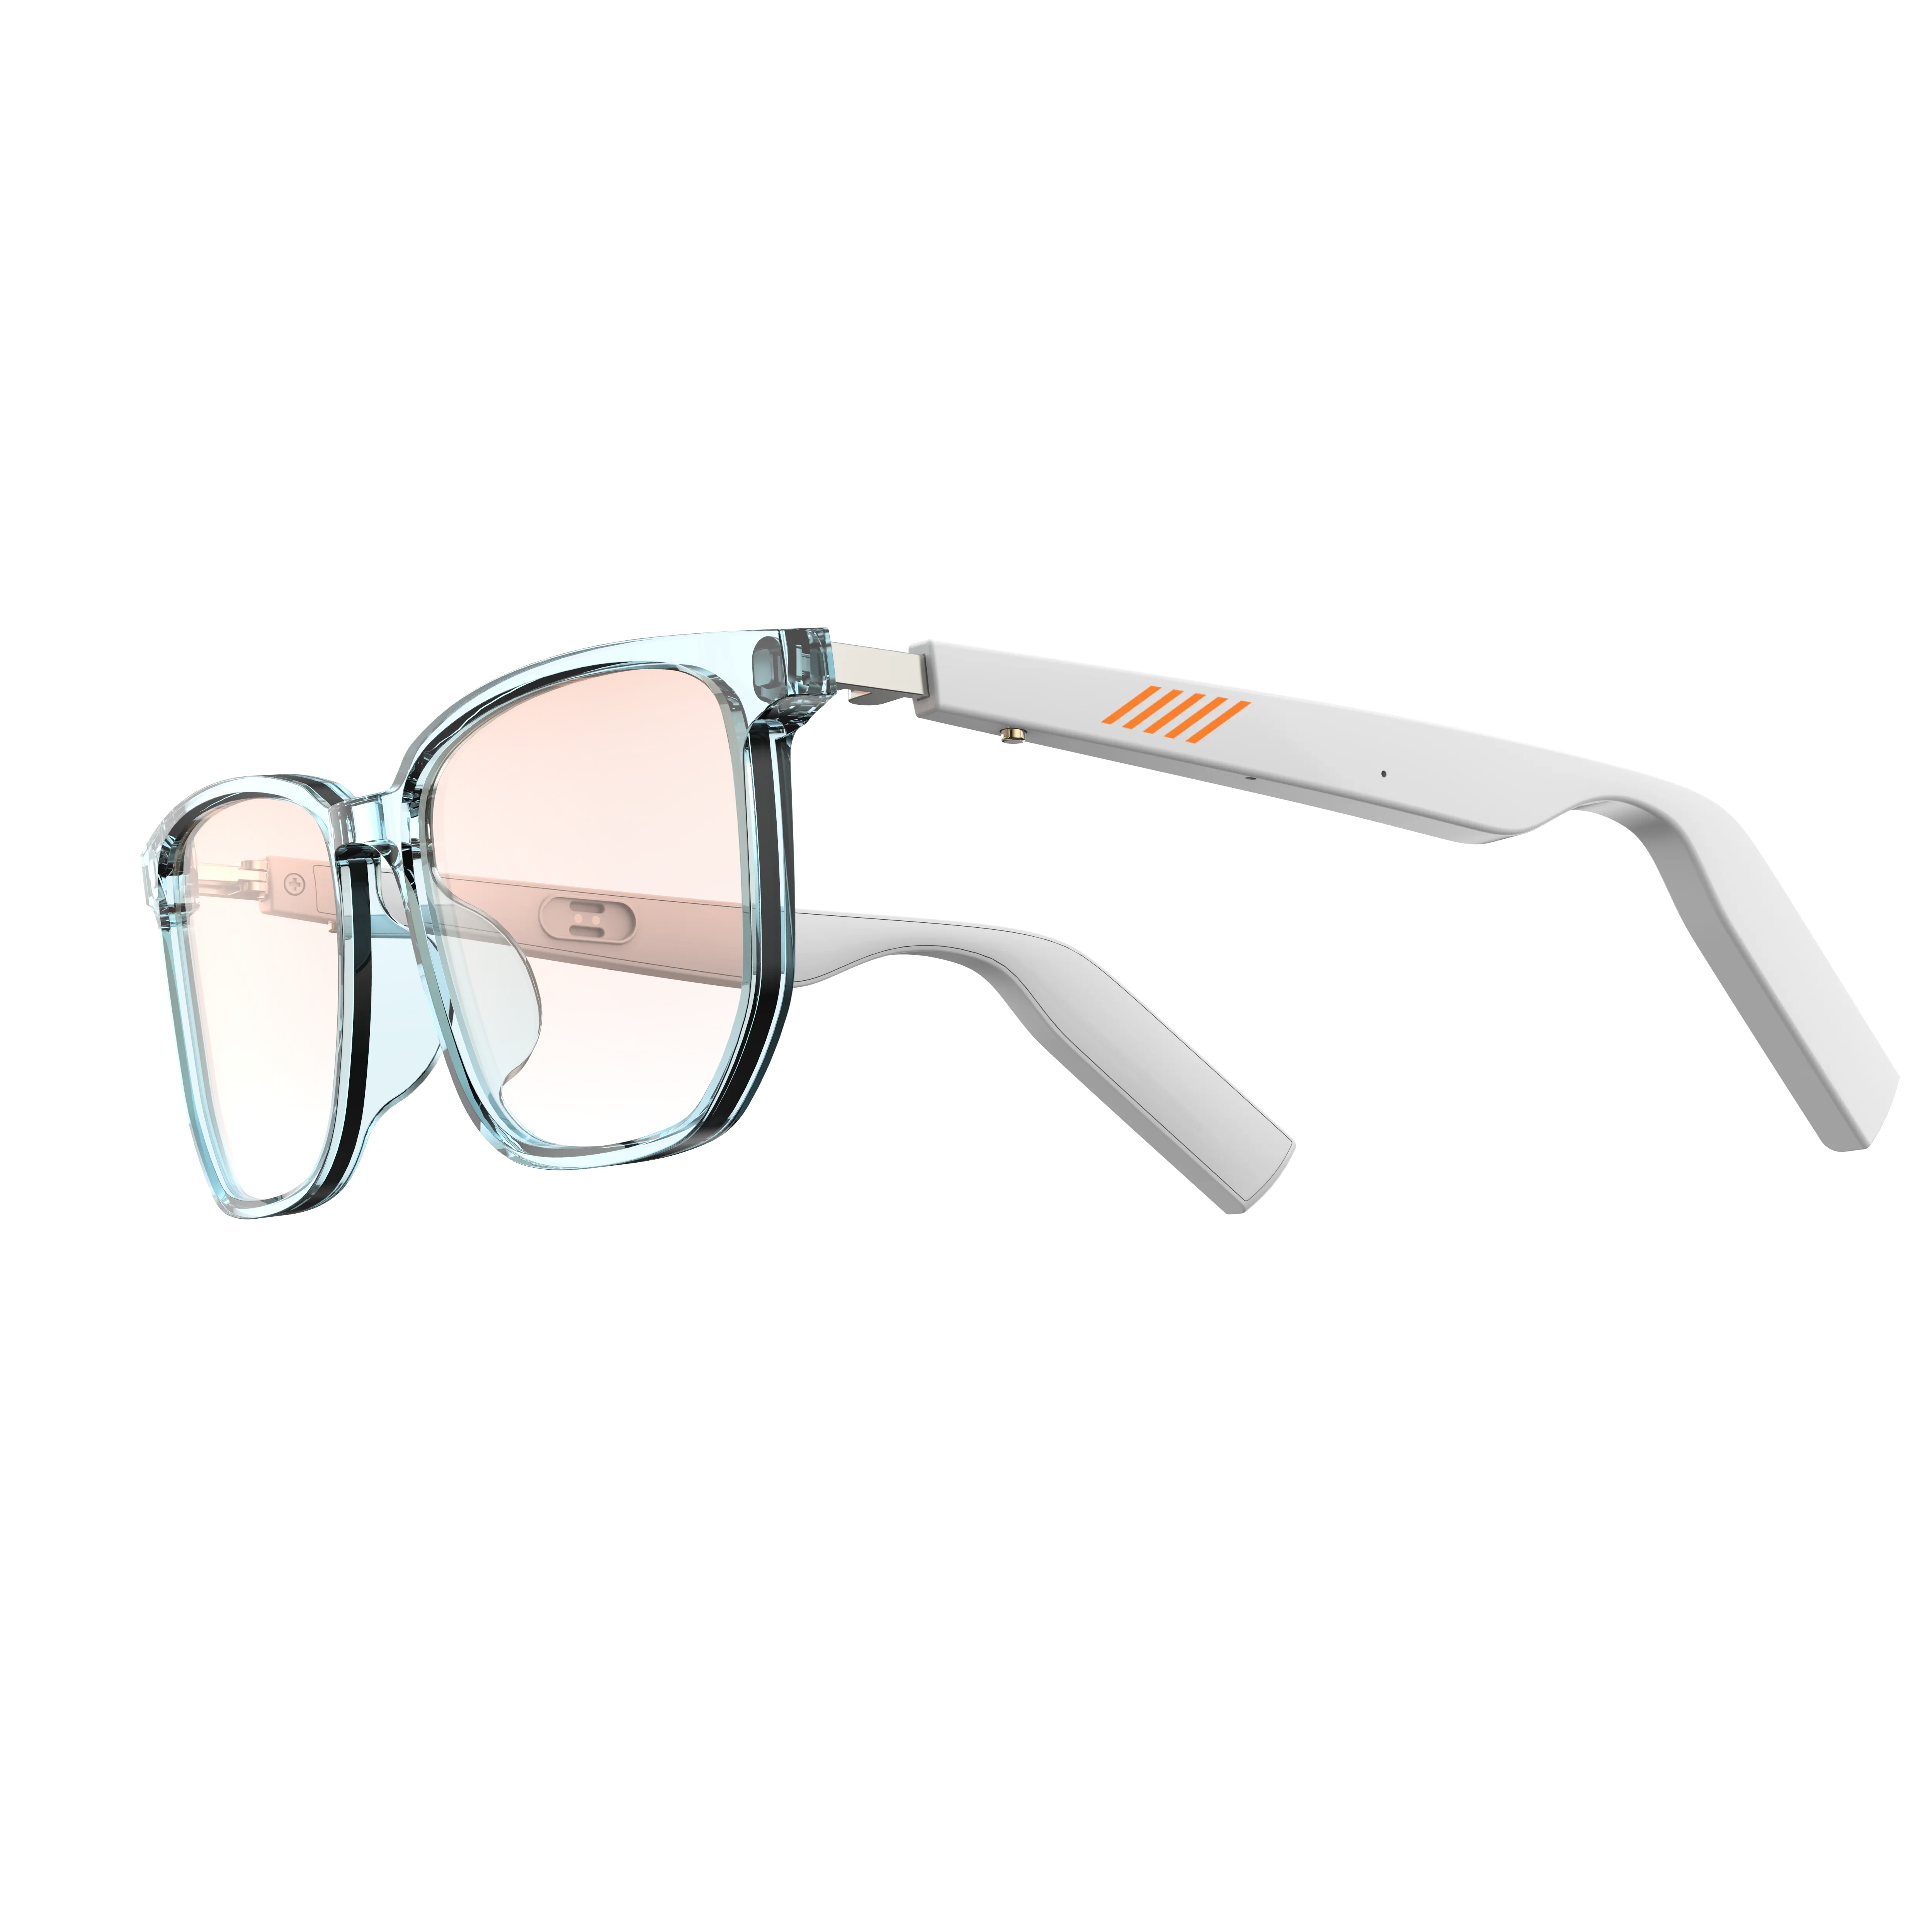 fashion smart bluetooth wireless glasses